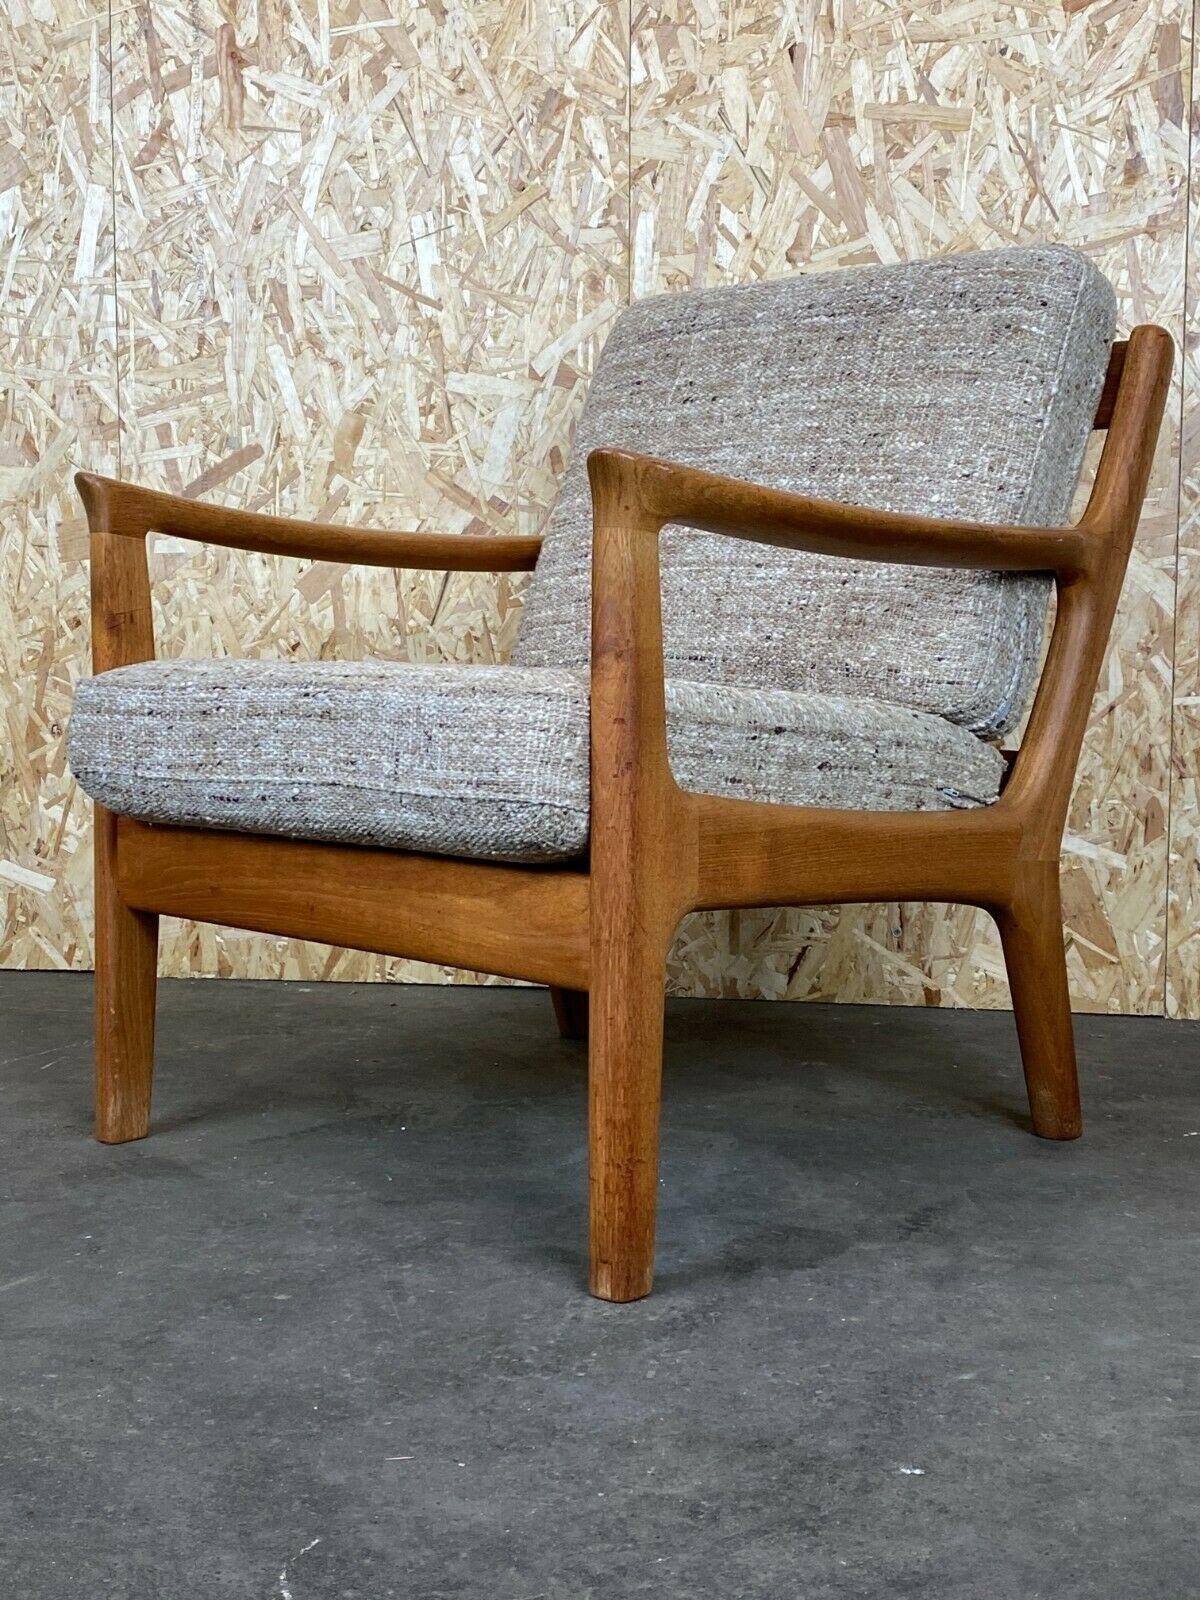 60s 70s Teak easy chair Juul Kristensen Danish Denmark Design 60s

Object: Easy Chair

Manufacturer: Juul Kristensen

Condition: good

Age: around 1960-1970

Dimensions:

71cm x 80cm x 81cm
Seat height = 42cm

Other notes:

The